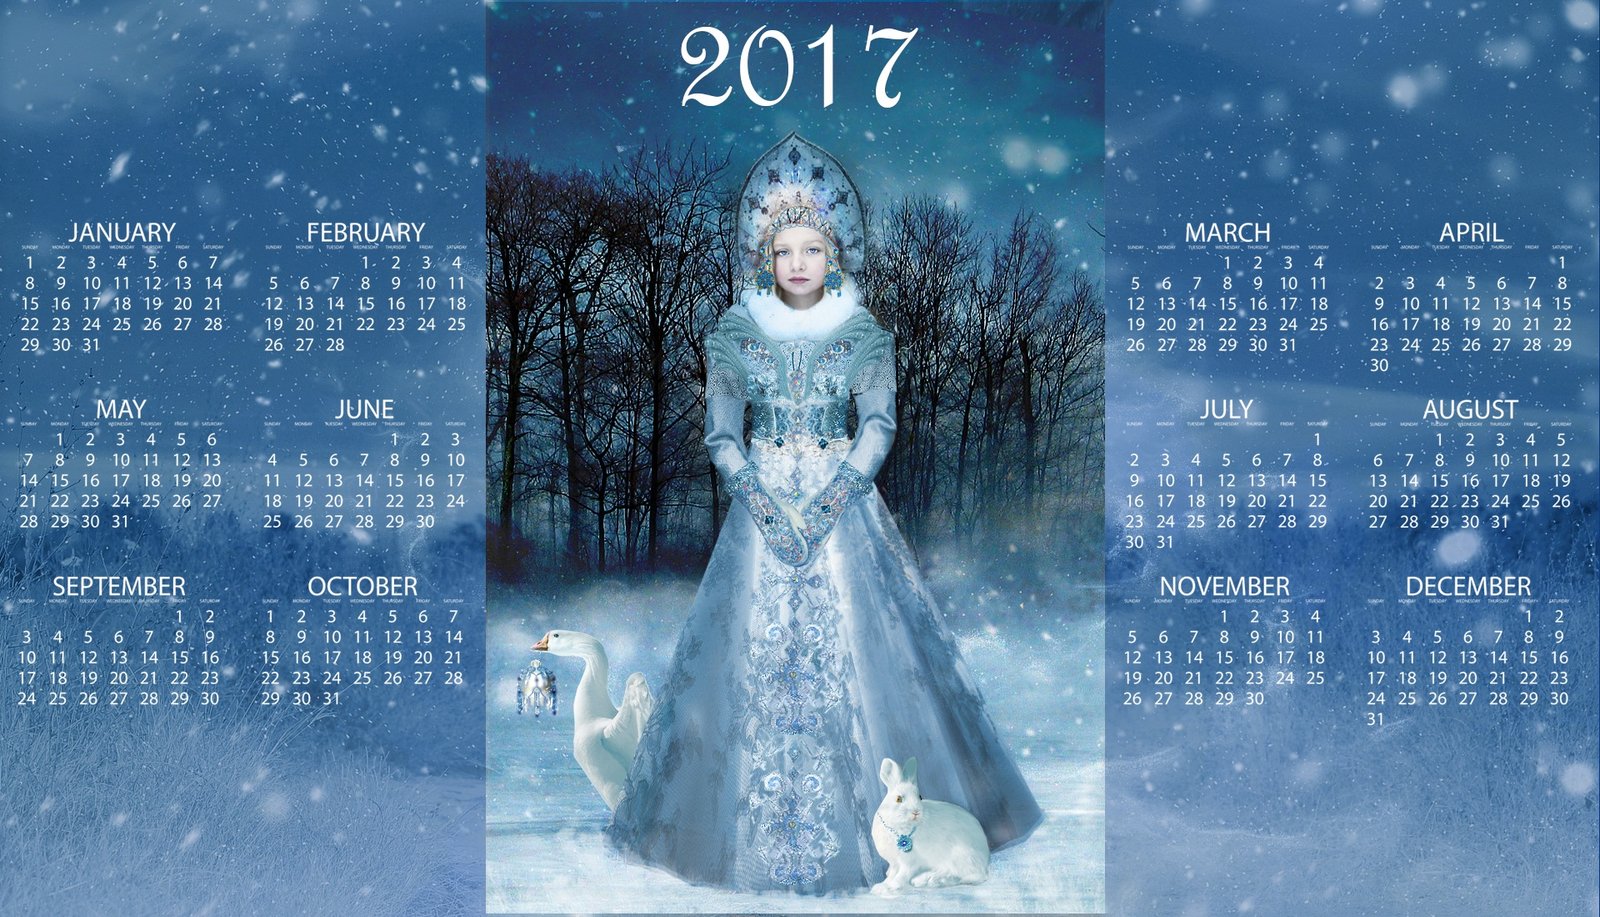 2017 Year Calendar Wallpaper: Download Free 2017 Calendar ...